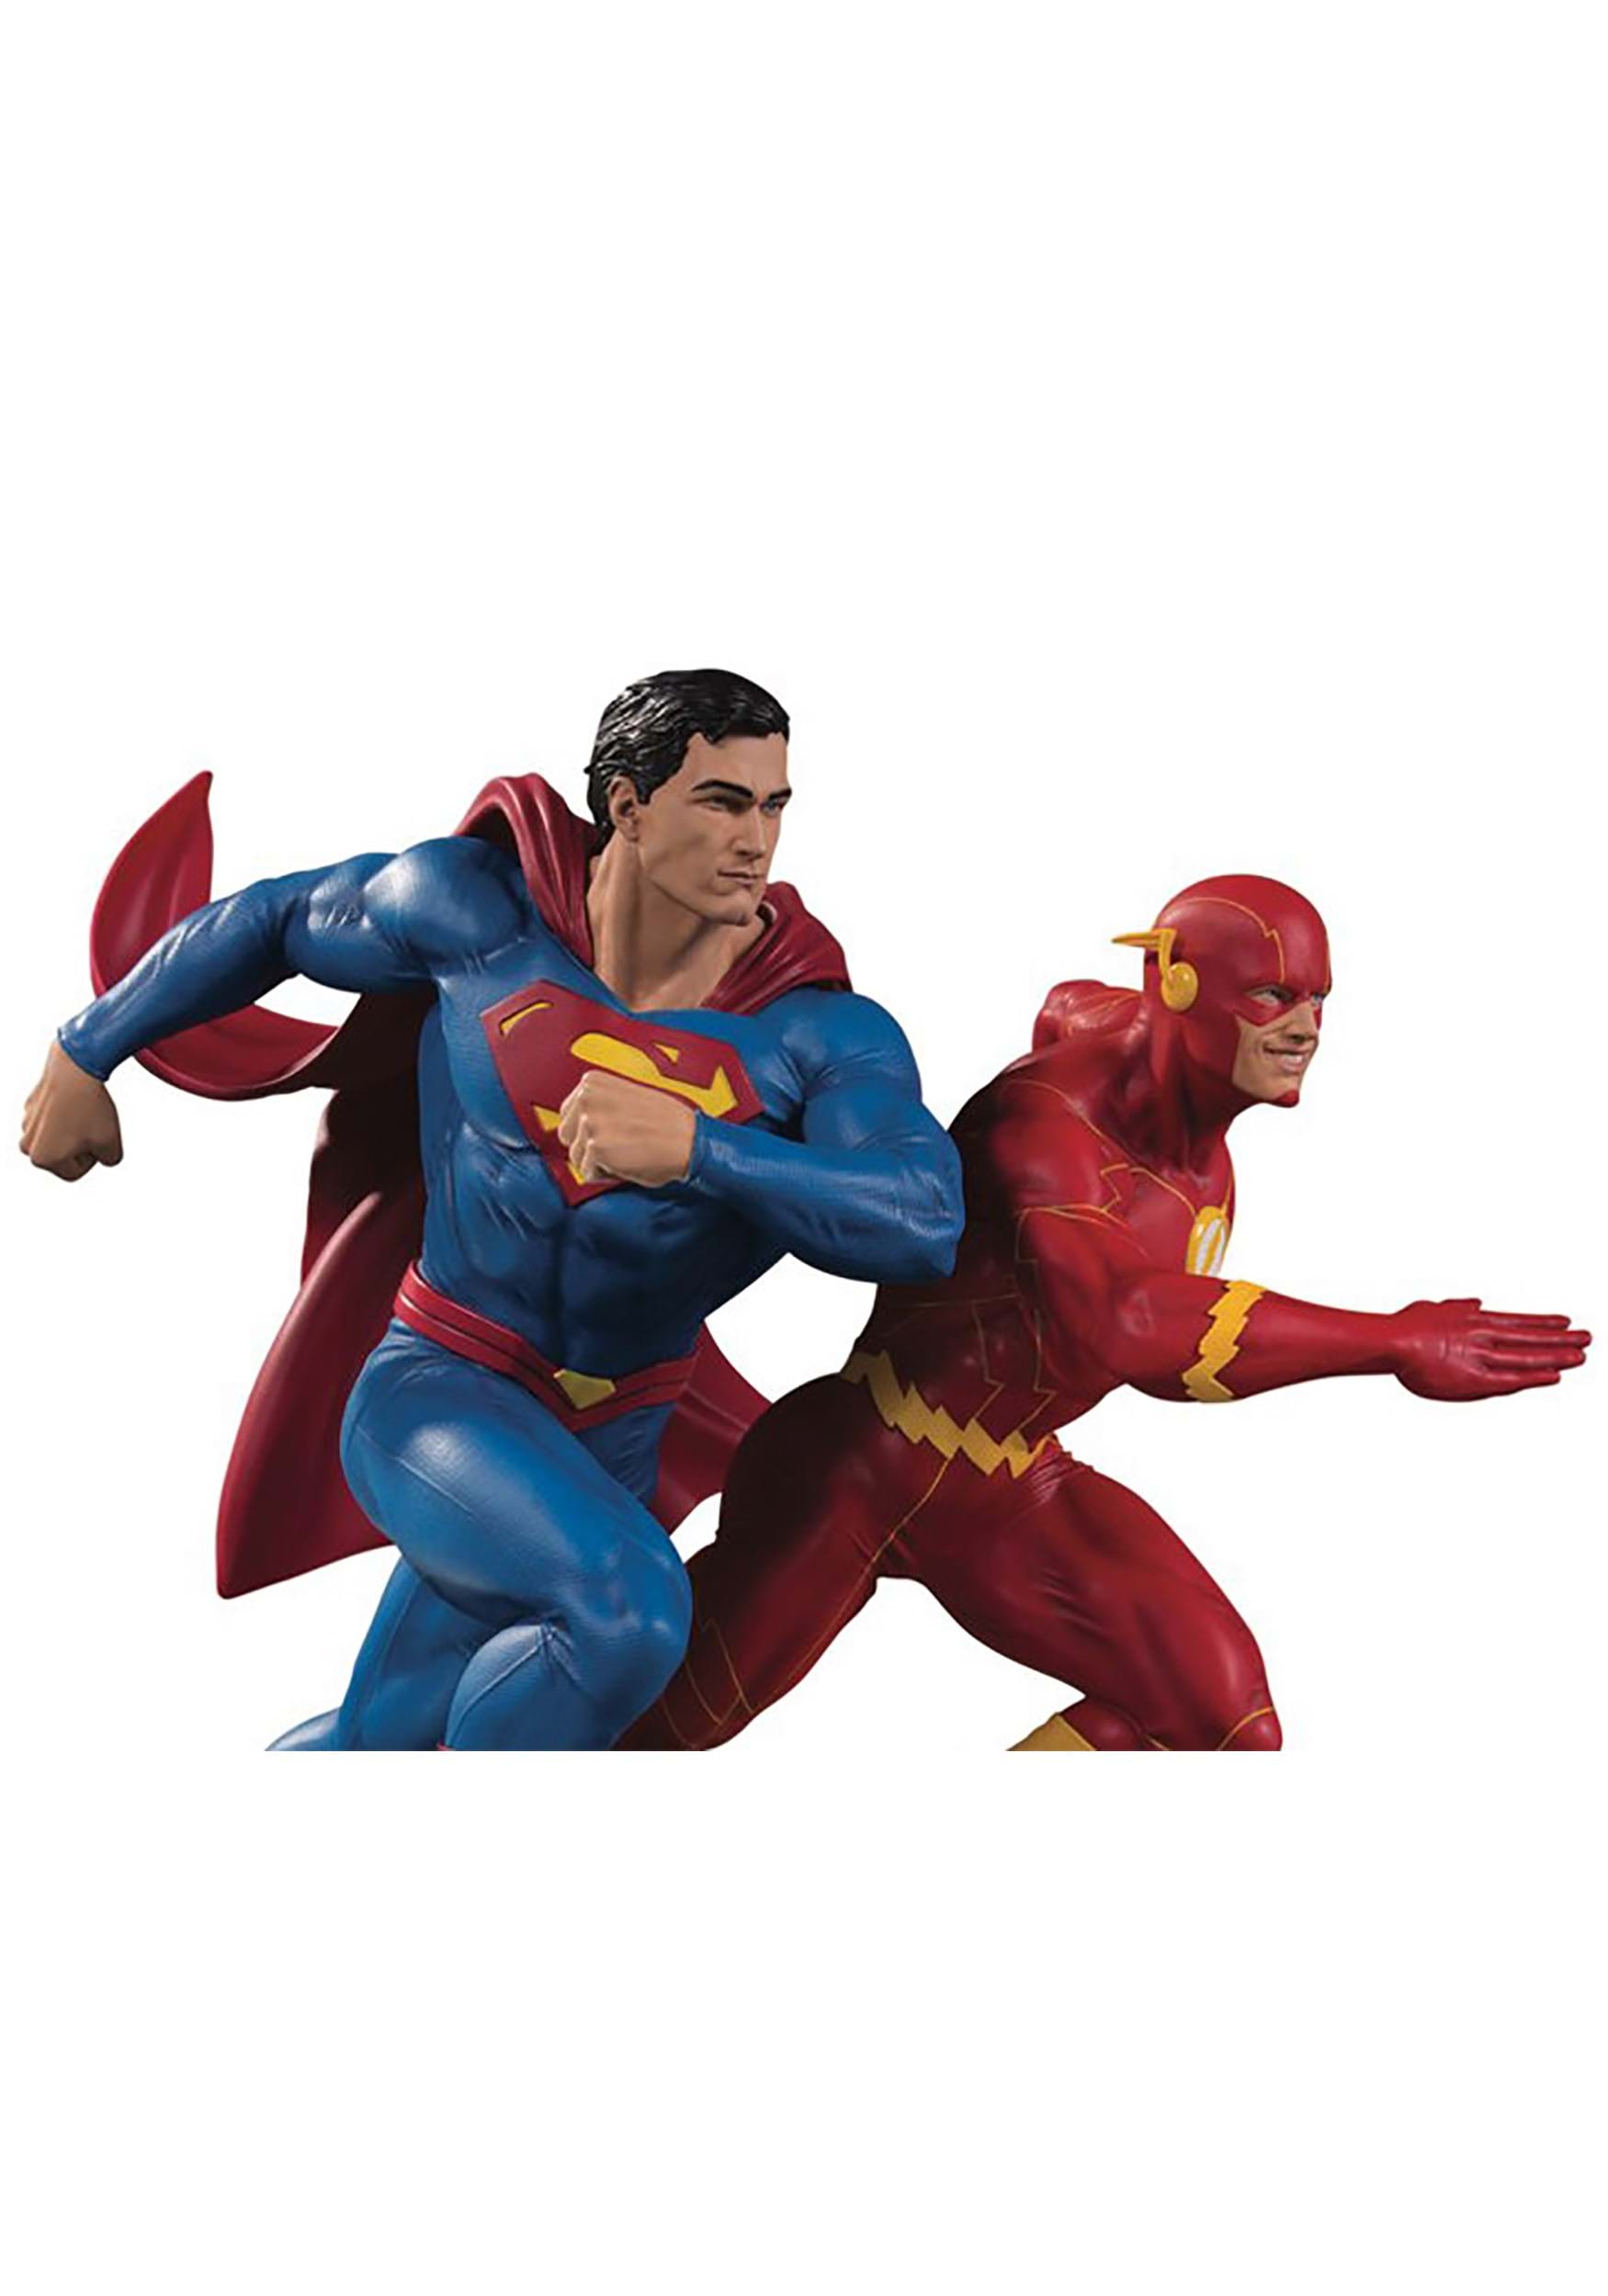 Image of McFarlane DC Gallery Superman vs Flash Racing 2nd Edition Statue